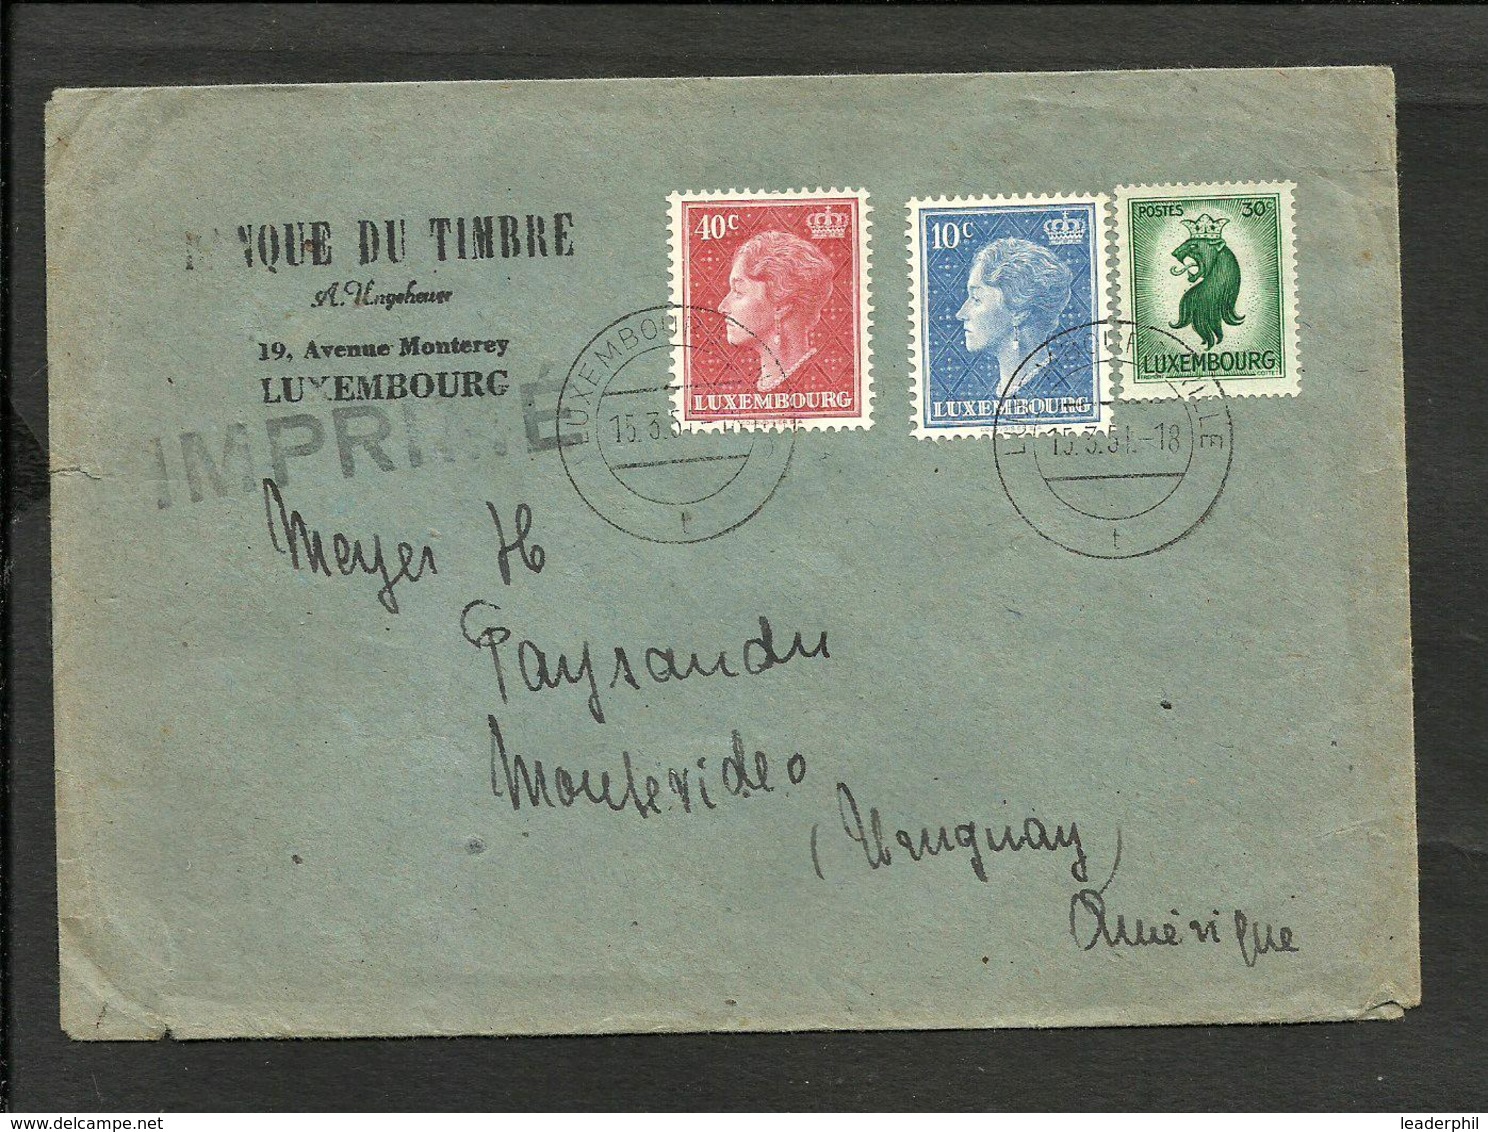 LUXEMBURG 1951 COVER TO URUGUAY, RARE DESTINATION - 1948-58 Charlotte Linkerkant